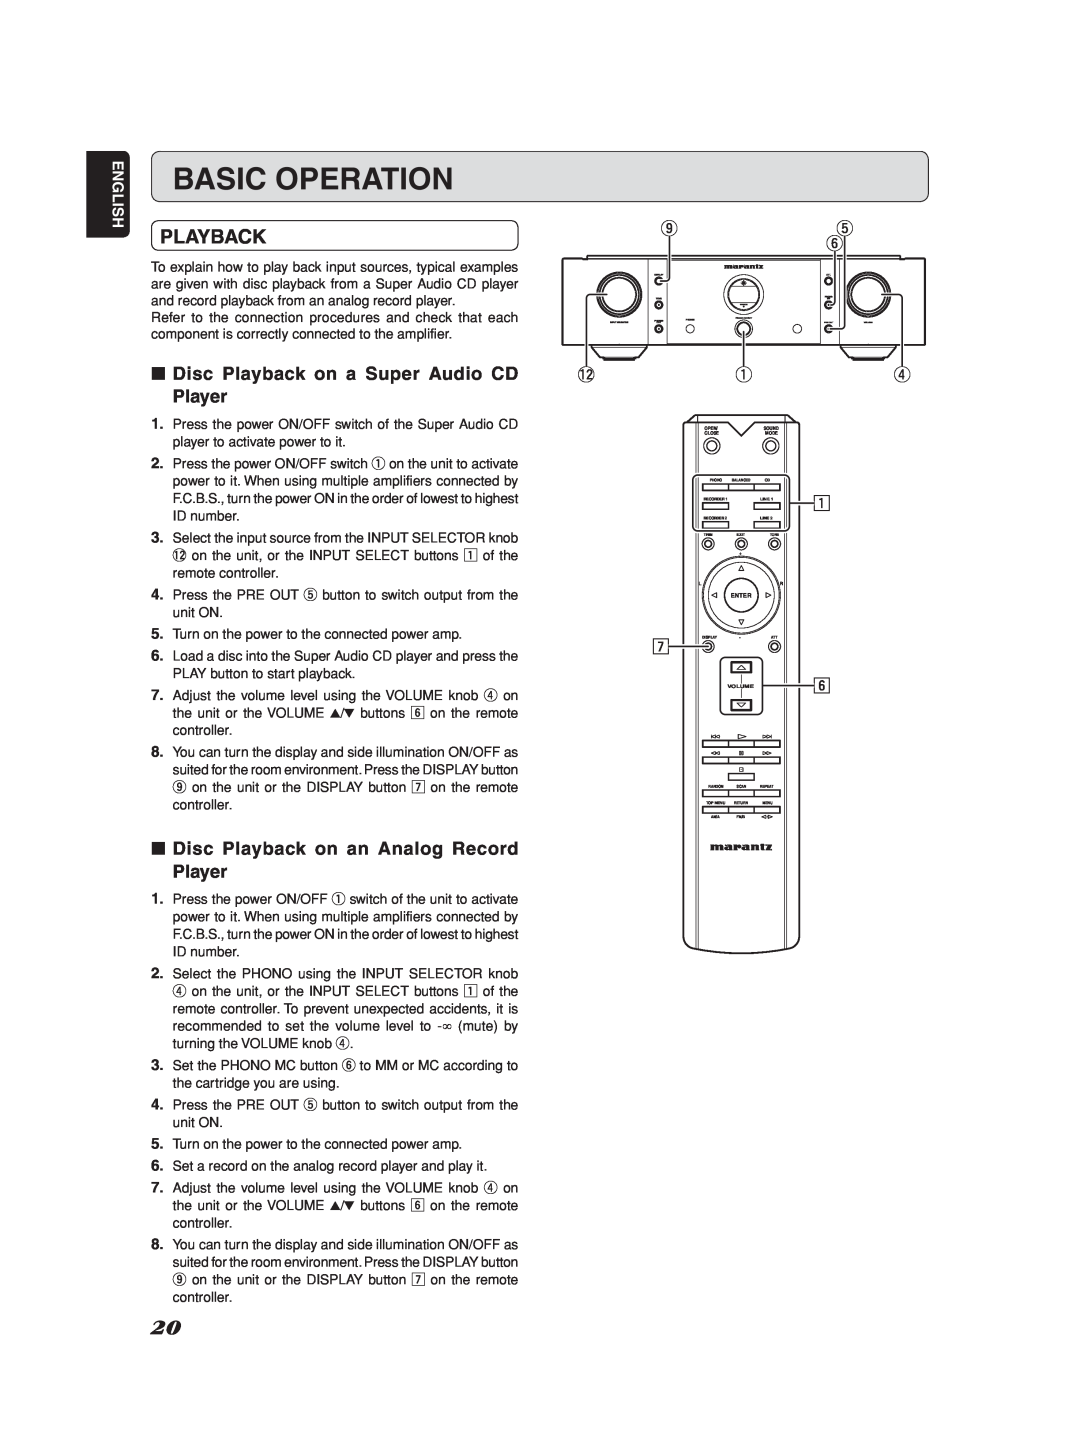 Marantz Model SC-11S1 manual Basic Operation, Playback, English 